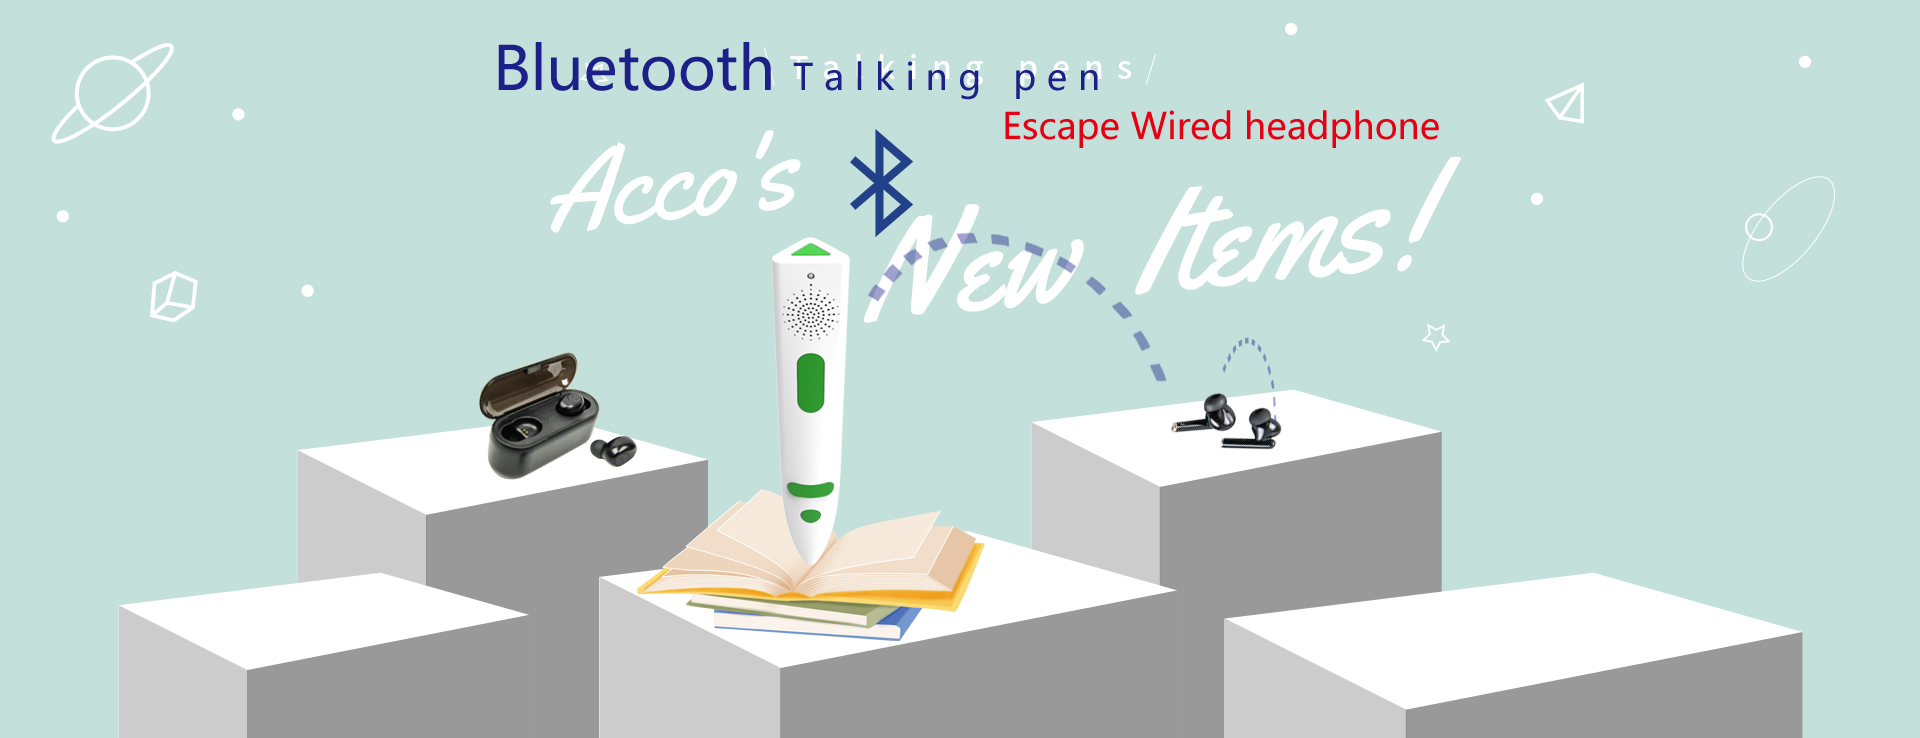 bluetooth talking pen